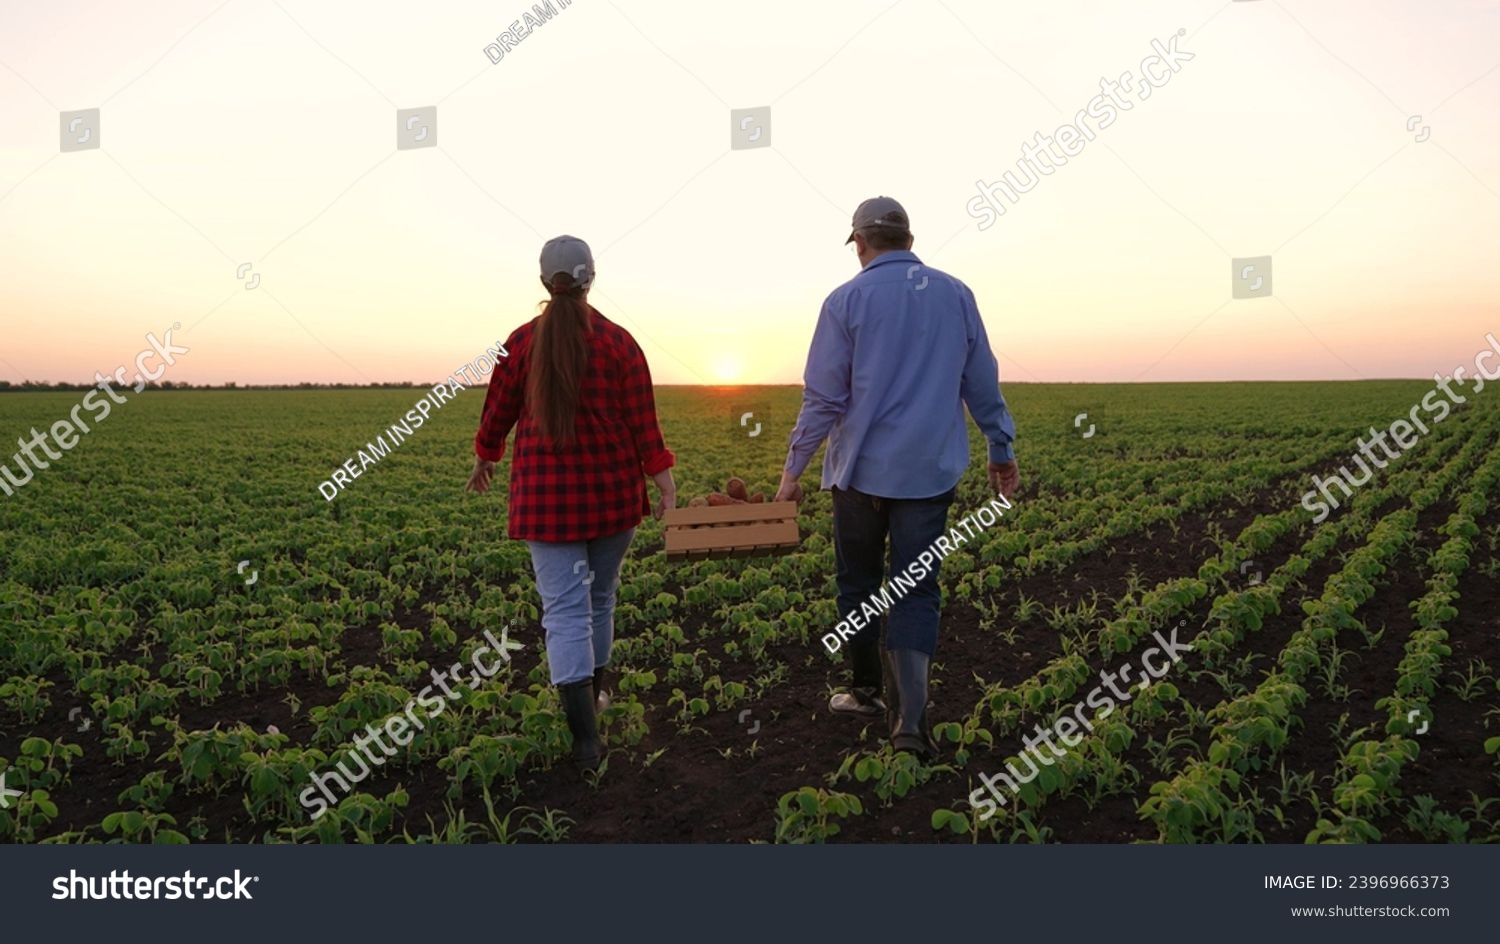 farmers carry vegetable harvest into field sunset. potato harvest season. small business agriculture. agronomist farmer field. agriculture concept. fresh vegetables for kitchen. businessmen boots sun. #2396966373